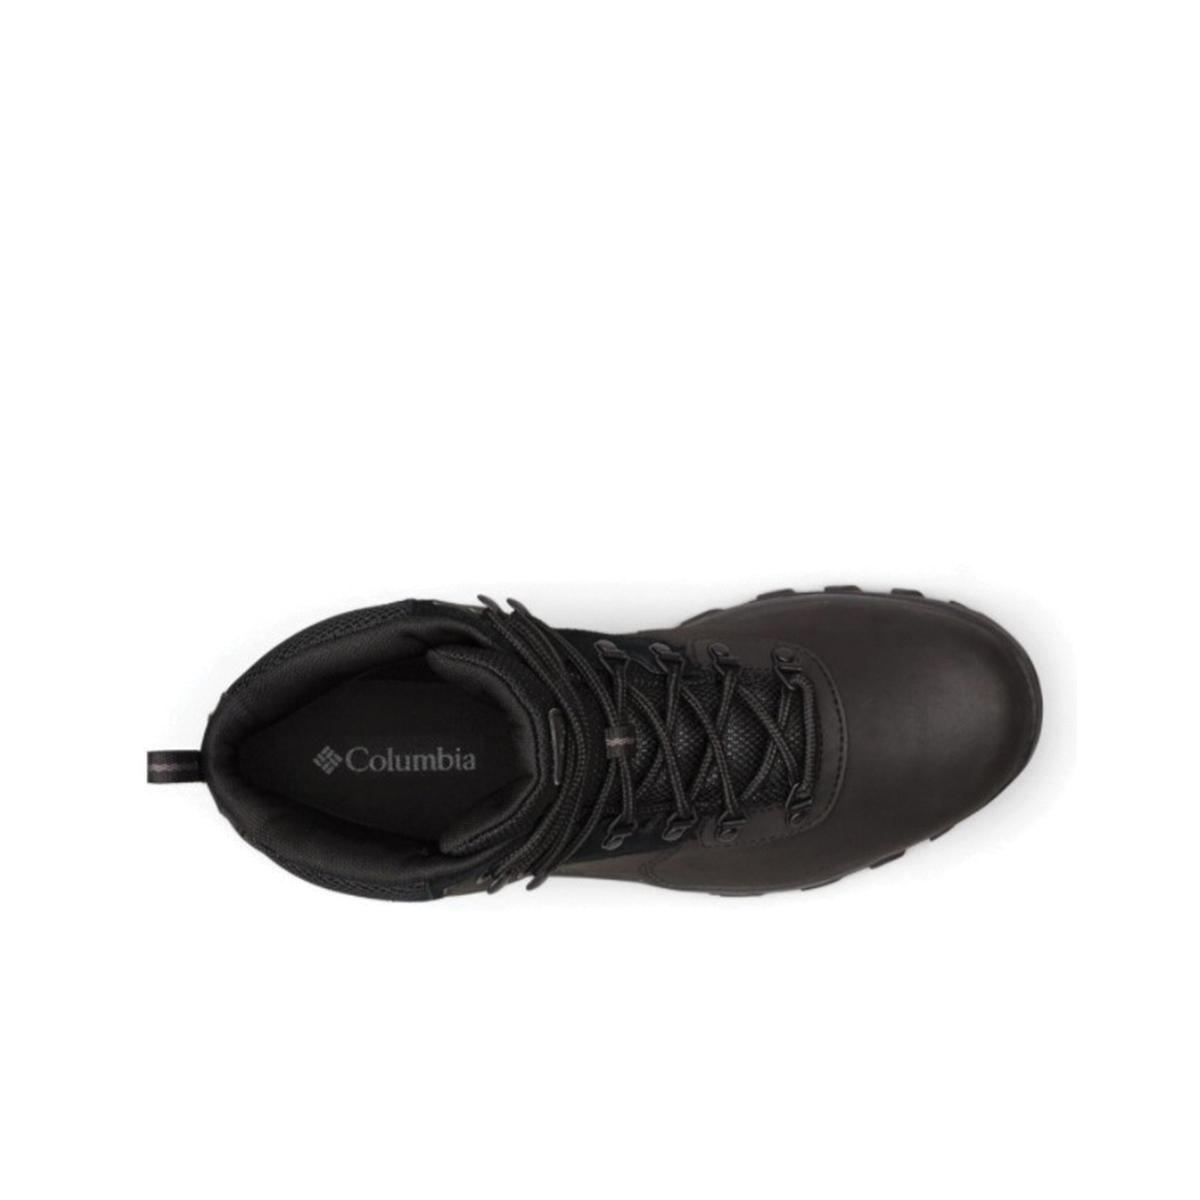 Columbia Newton Ridge Plus II Series 1594731-011-9.5 Hiking Boots, 9.5, Black, Leather/Suede Upper - 3